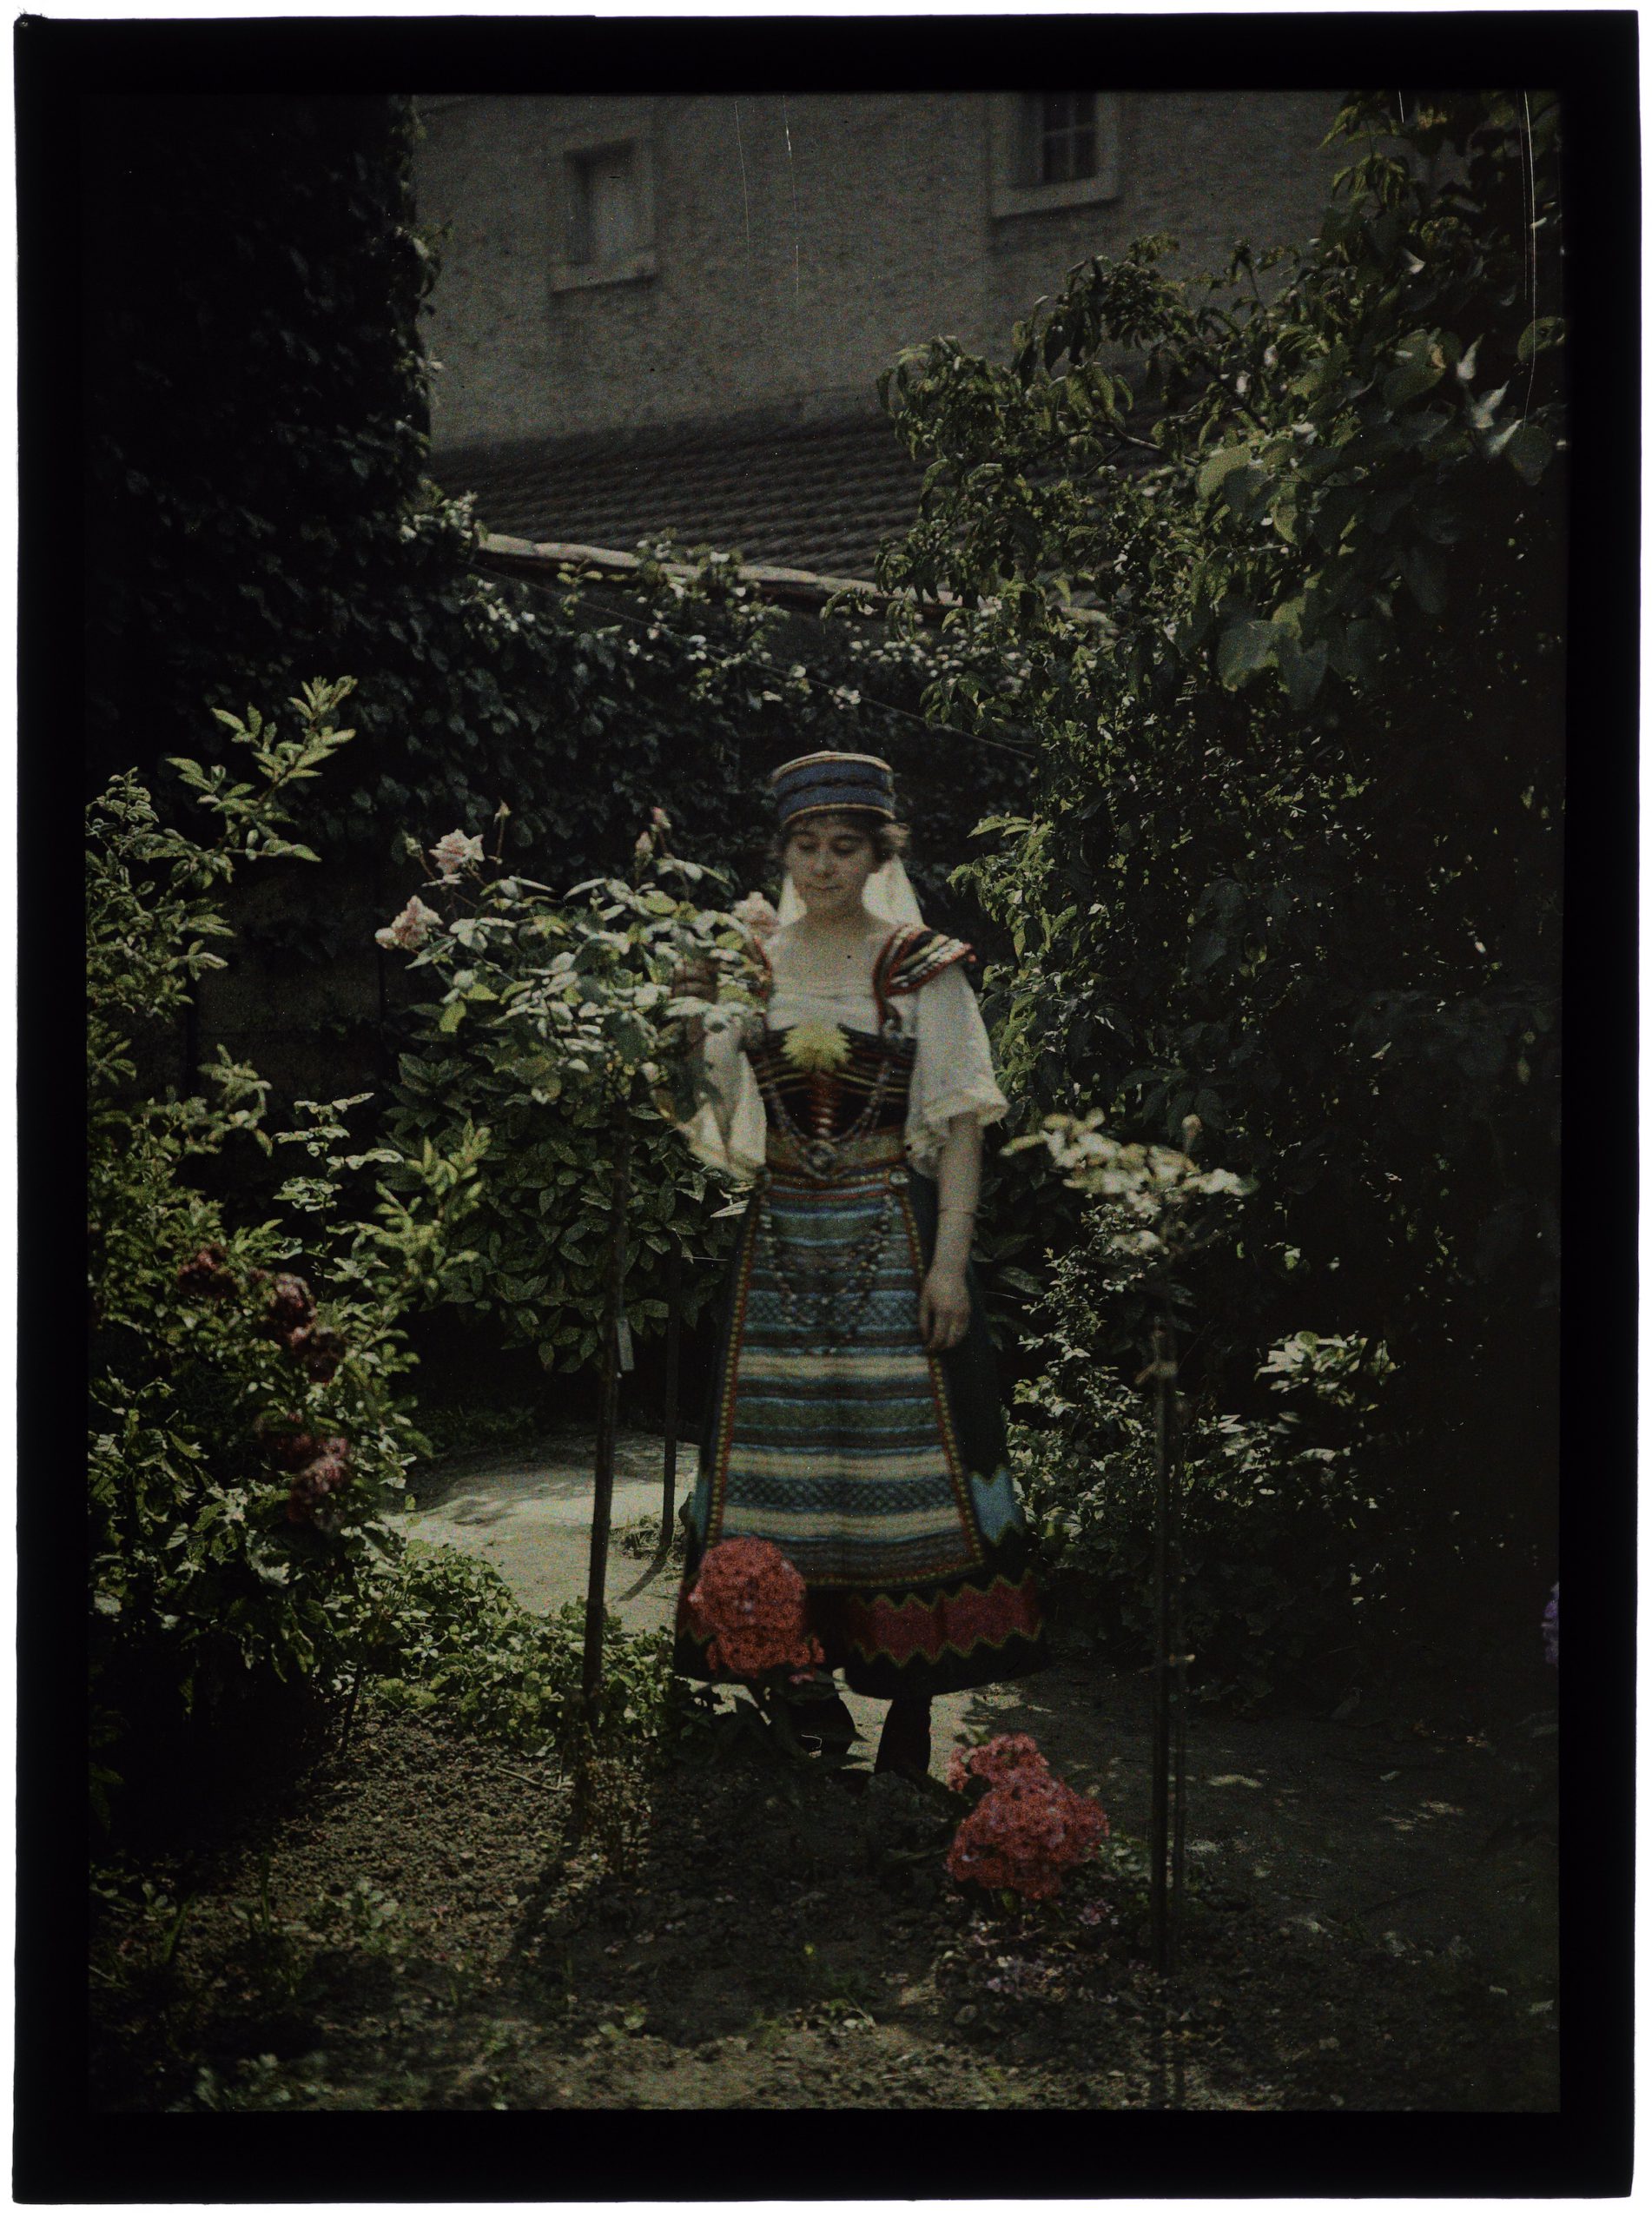 Femme en costume de hongroise au jardin